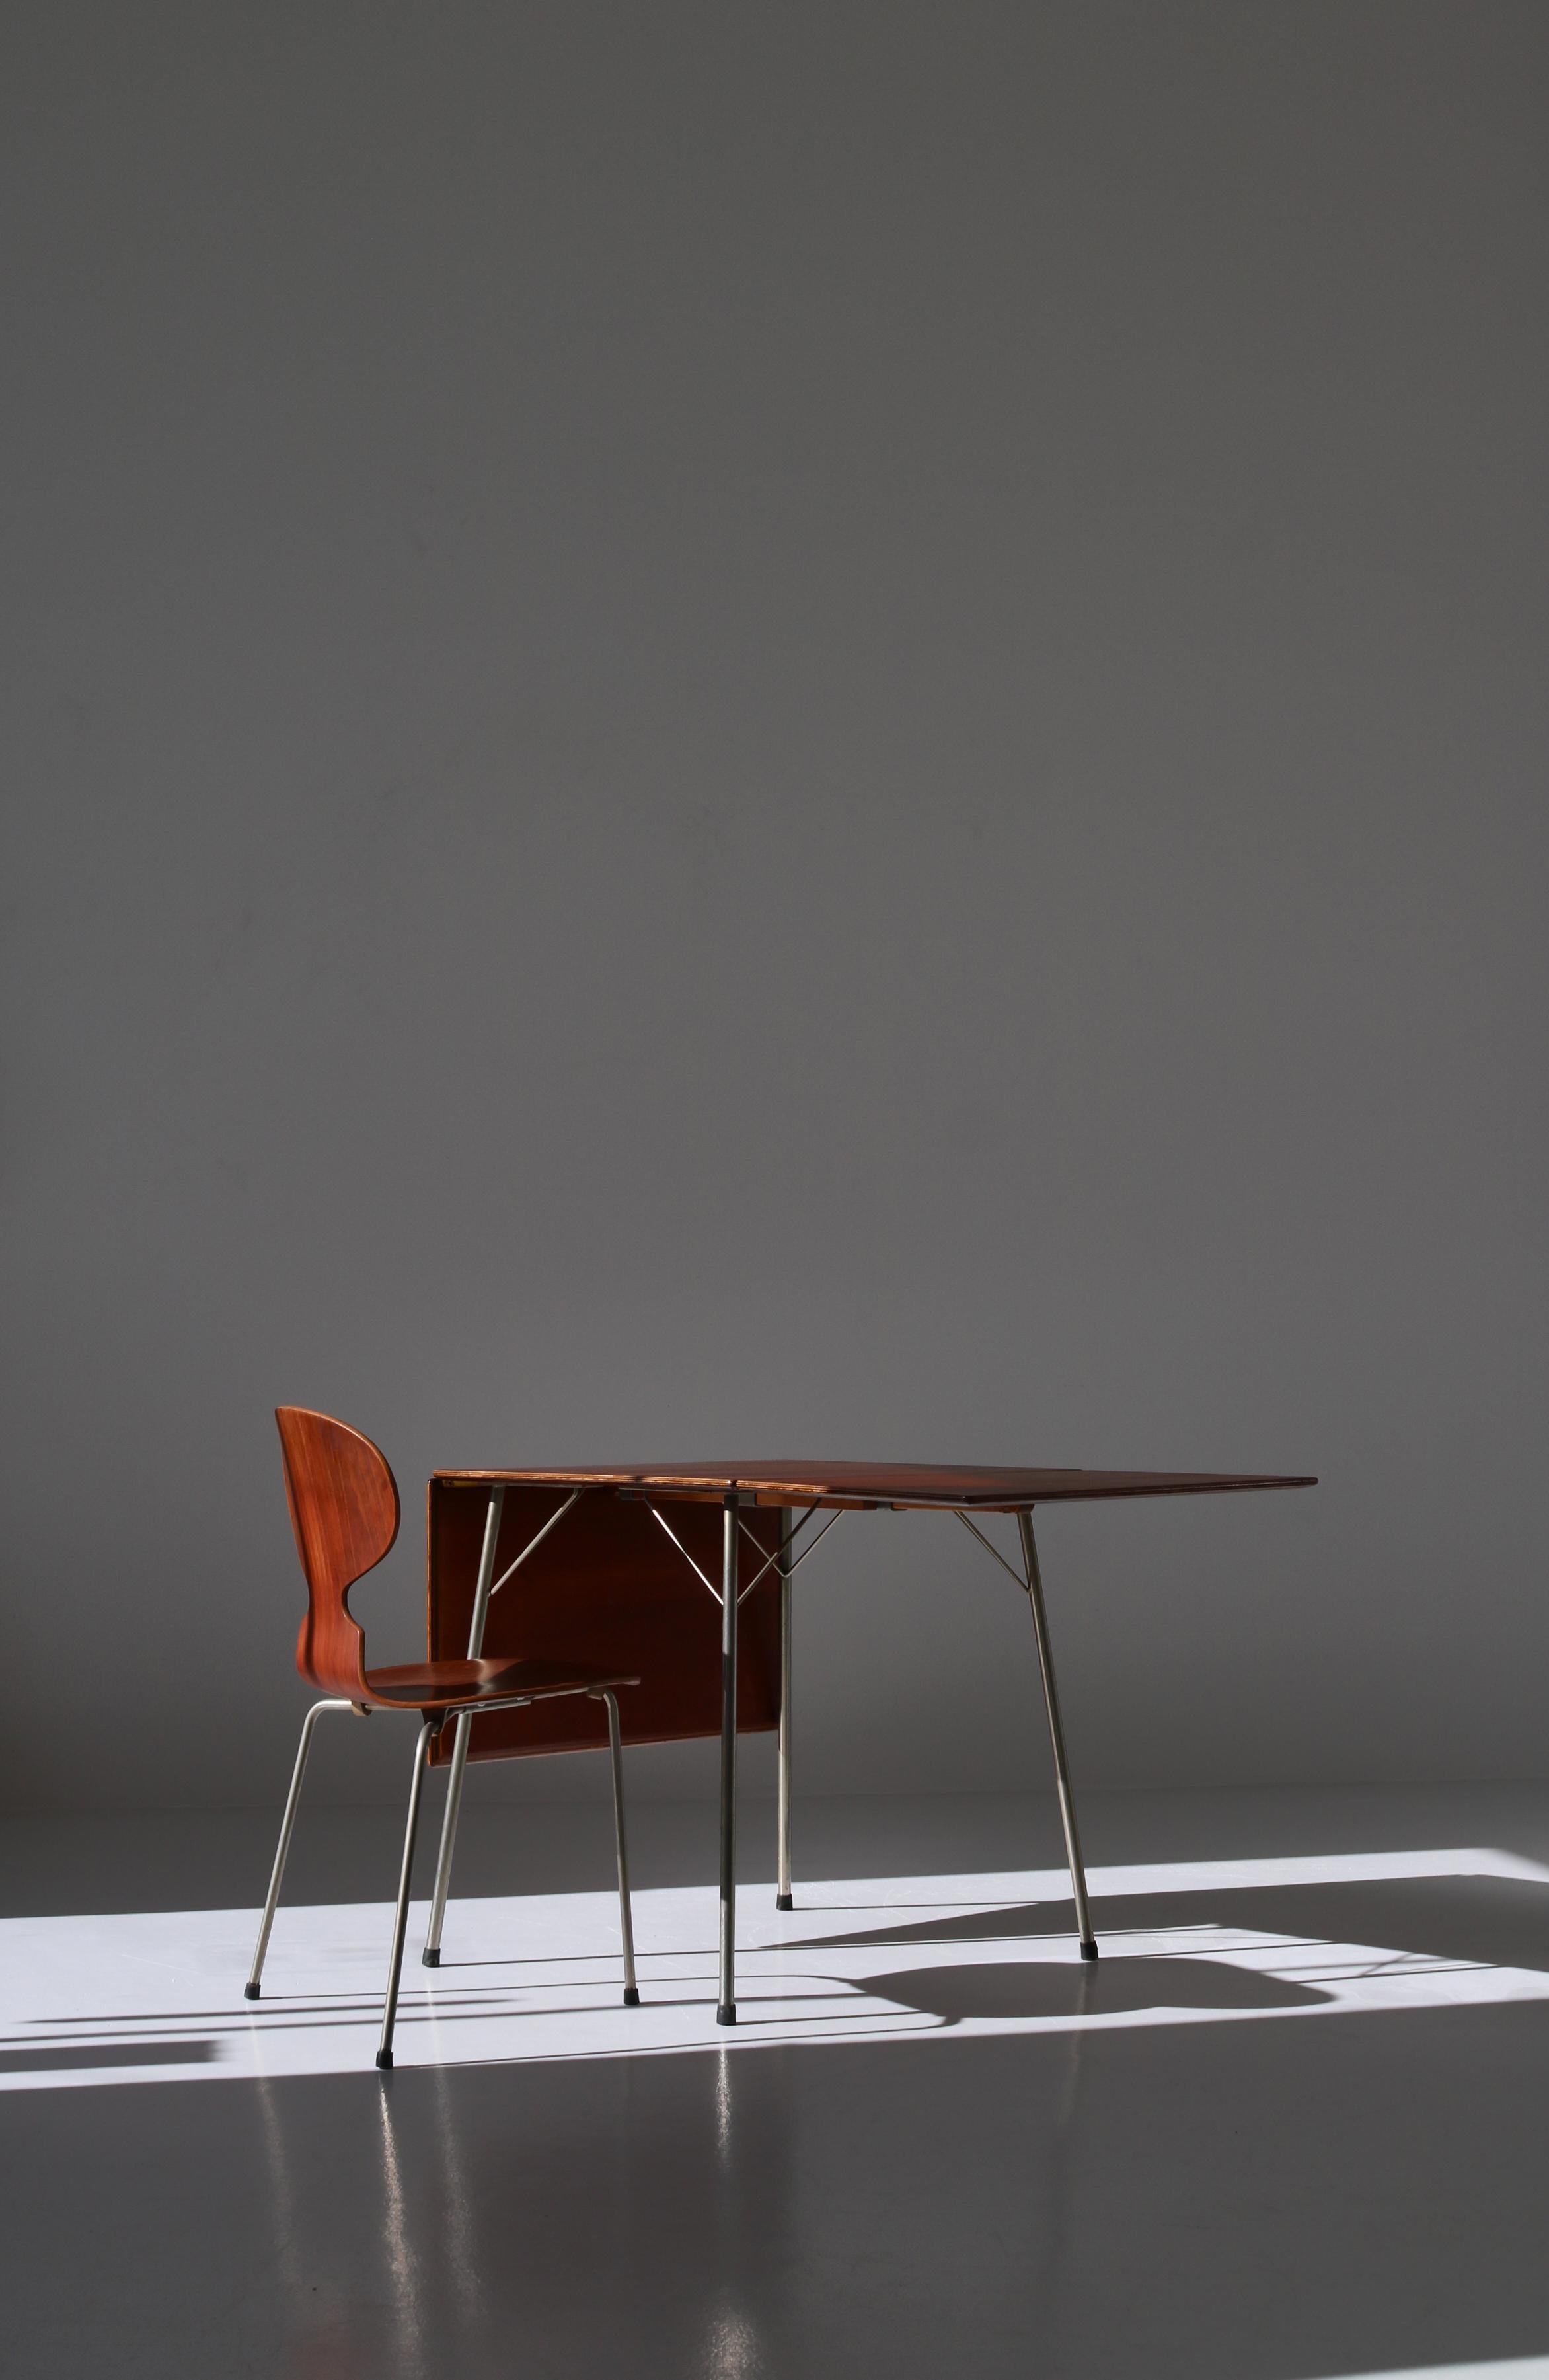 Wonderful small drop-leaf table in teak plywood and steel. Danish designer Arne Jacobsen’s masterpiece 